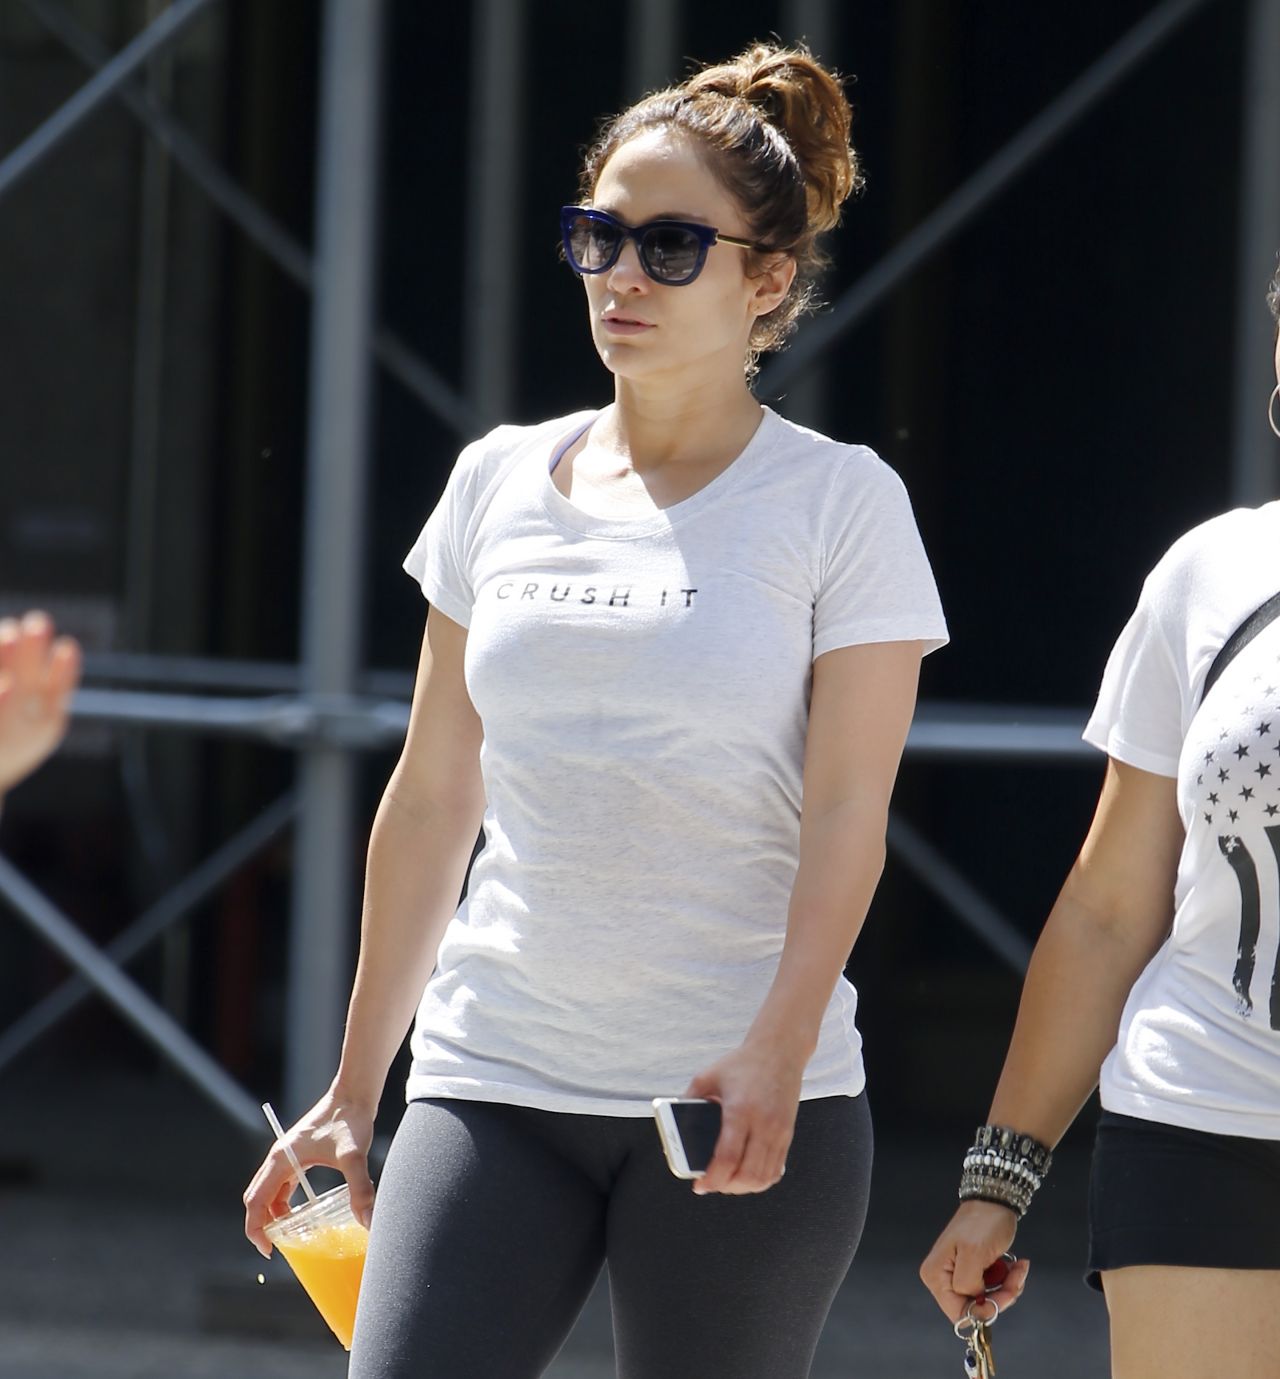 Jennifer Lopez Booty in Leggings - Leaving a Gym in NYC, August 2015 ...